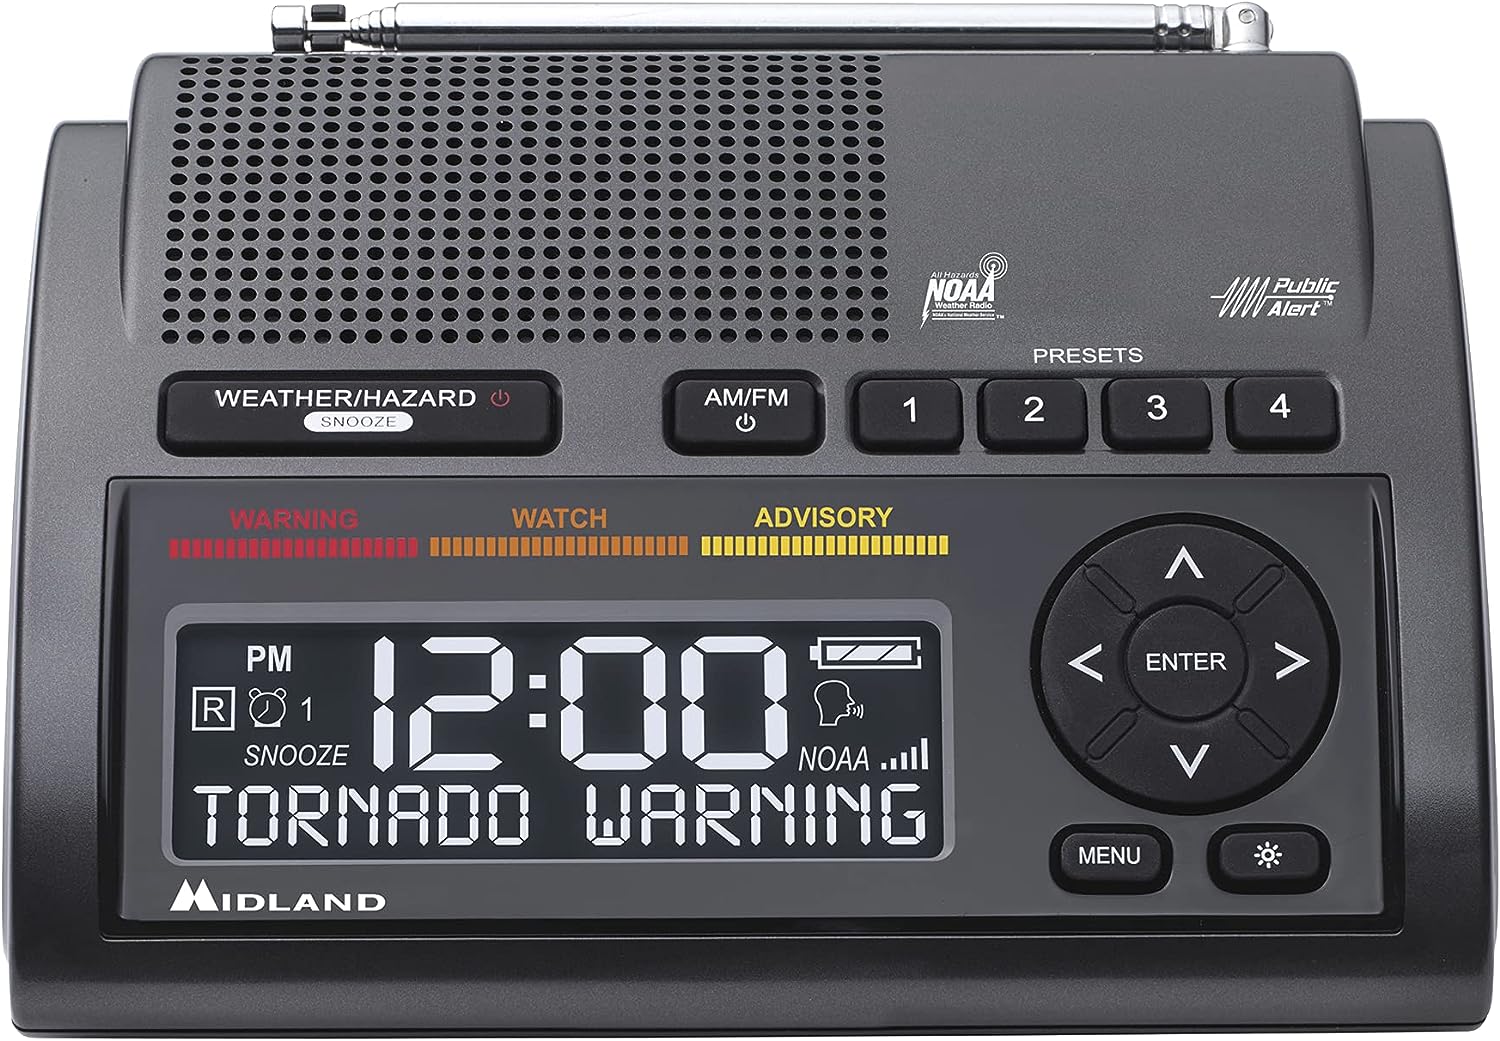 Midland - WR400, Deluxe NOAA Weather Alert Radio - [...]